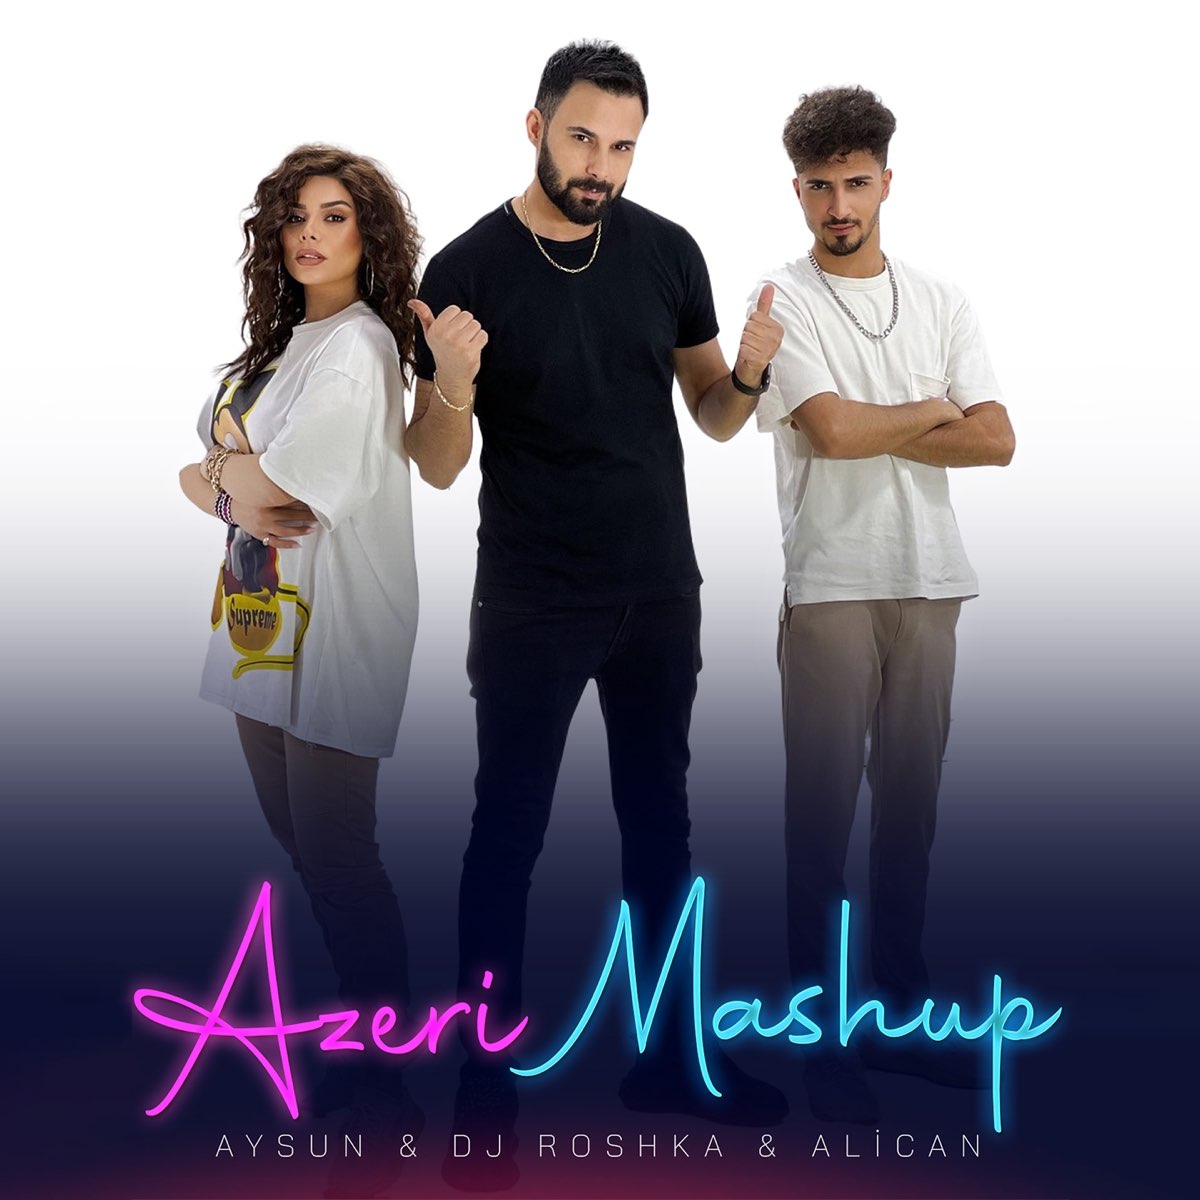 Azeri mashup 2. DJ Roshka. Азери машуп. Turkish Mashup.